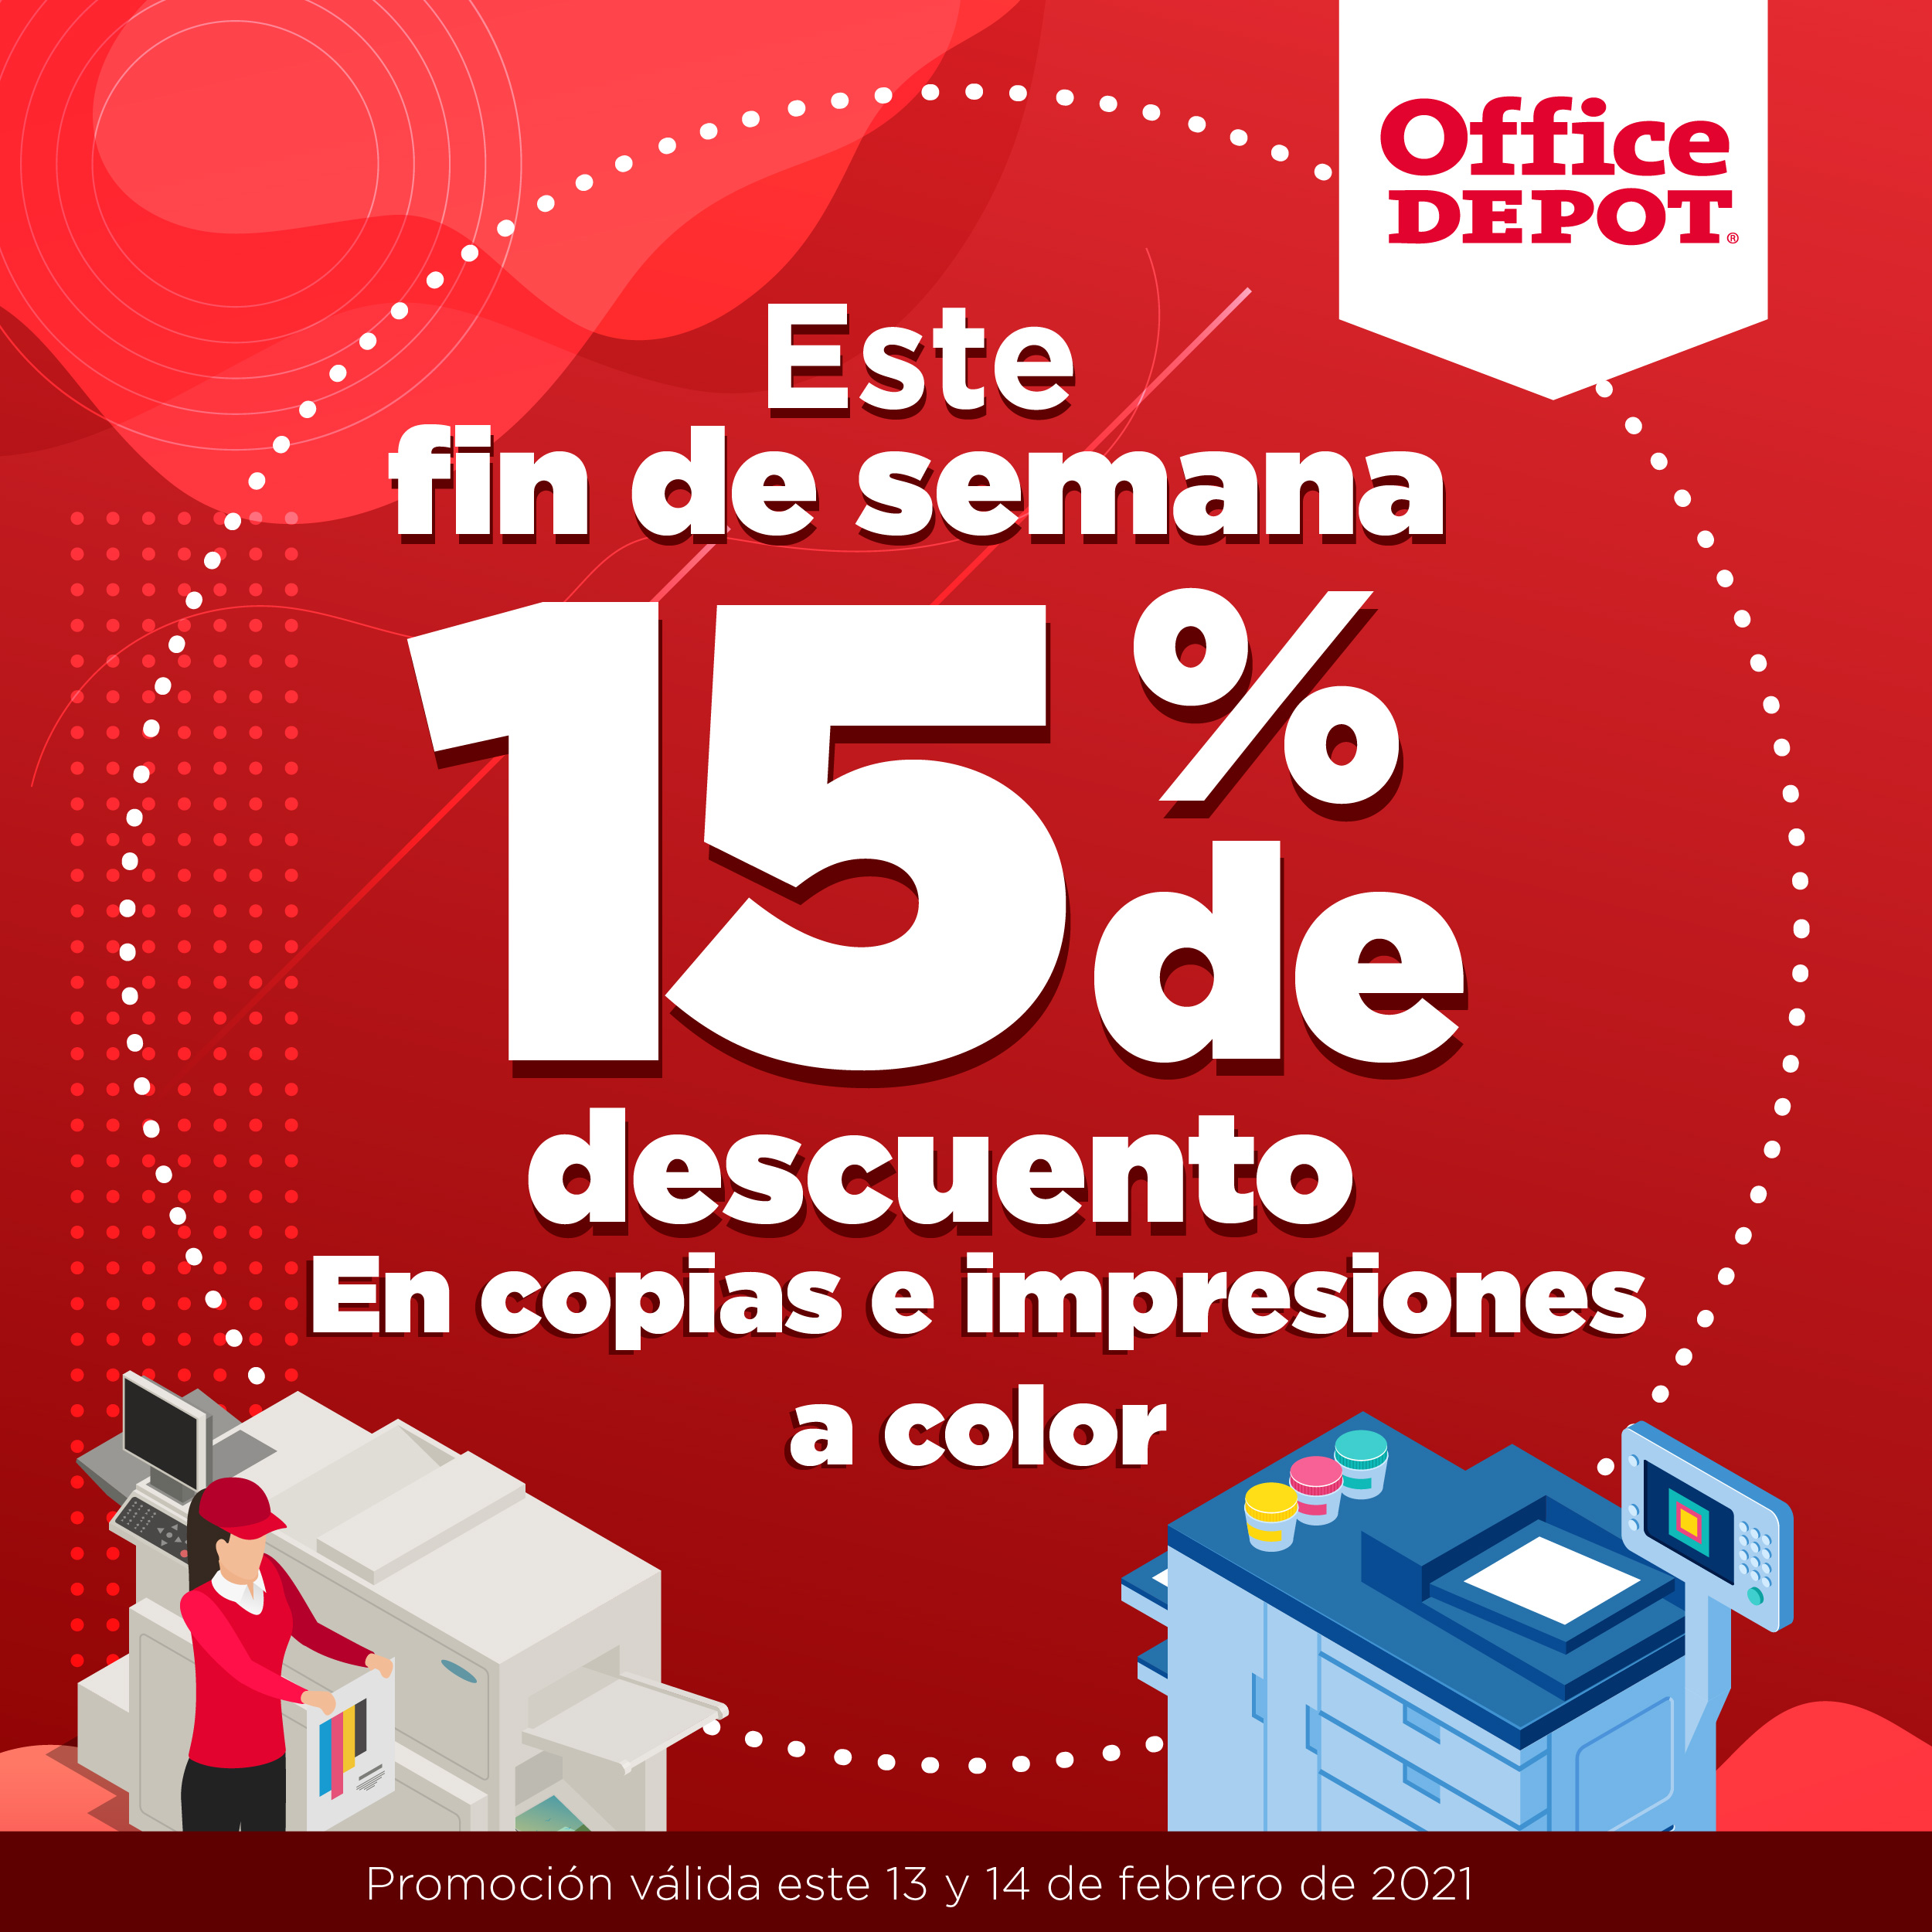 Office Depot Costa Rica al Twitter: 